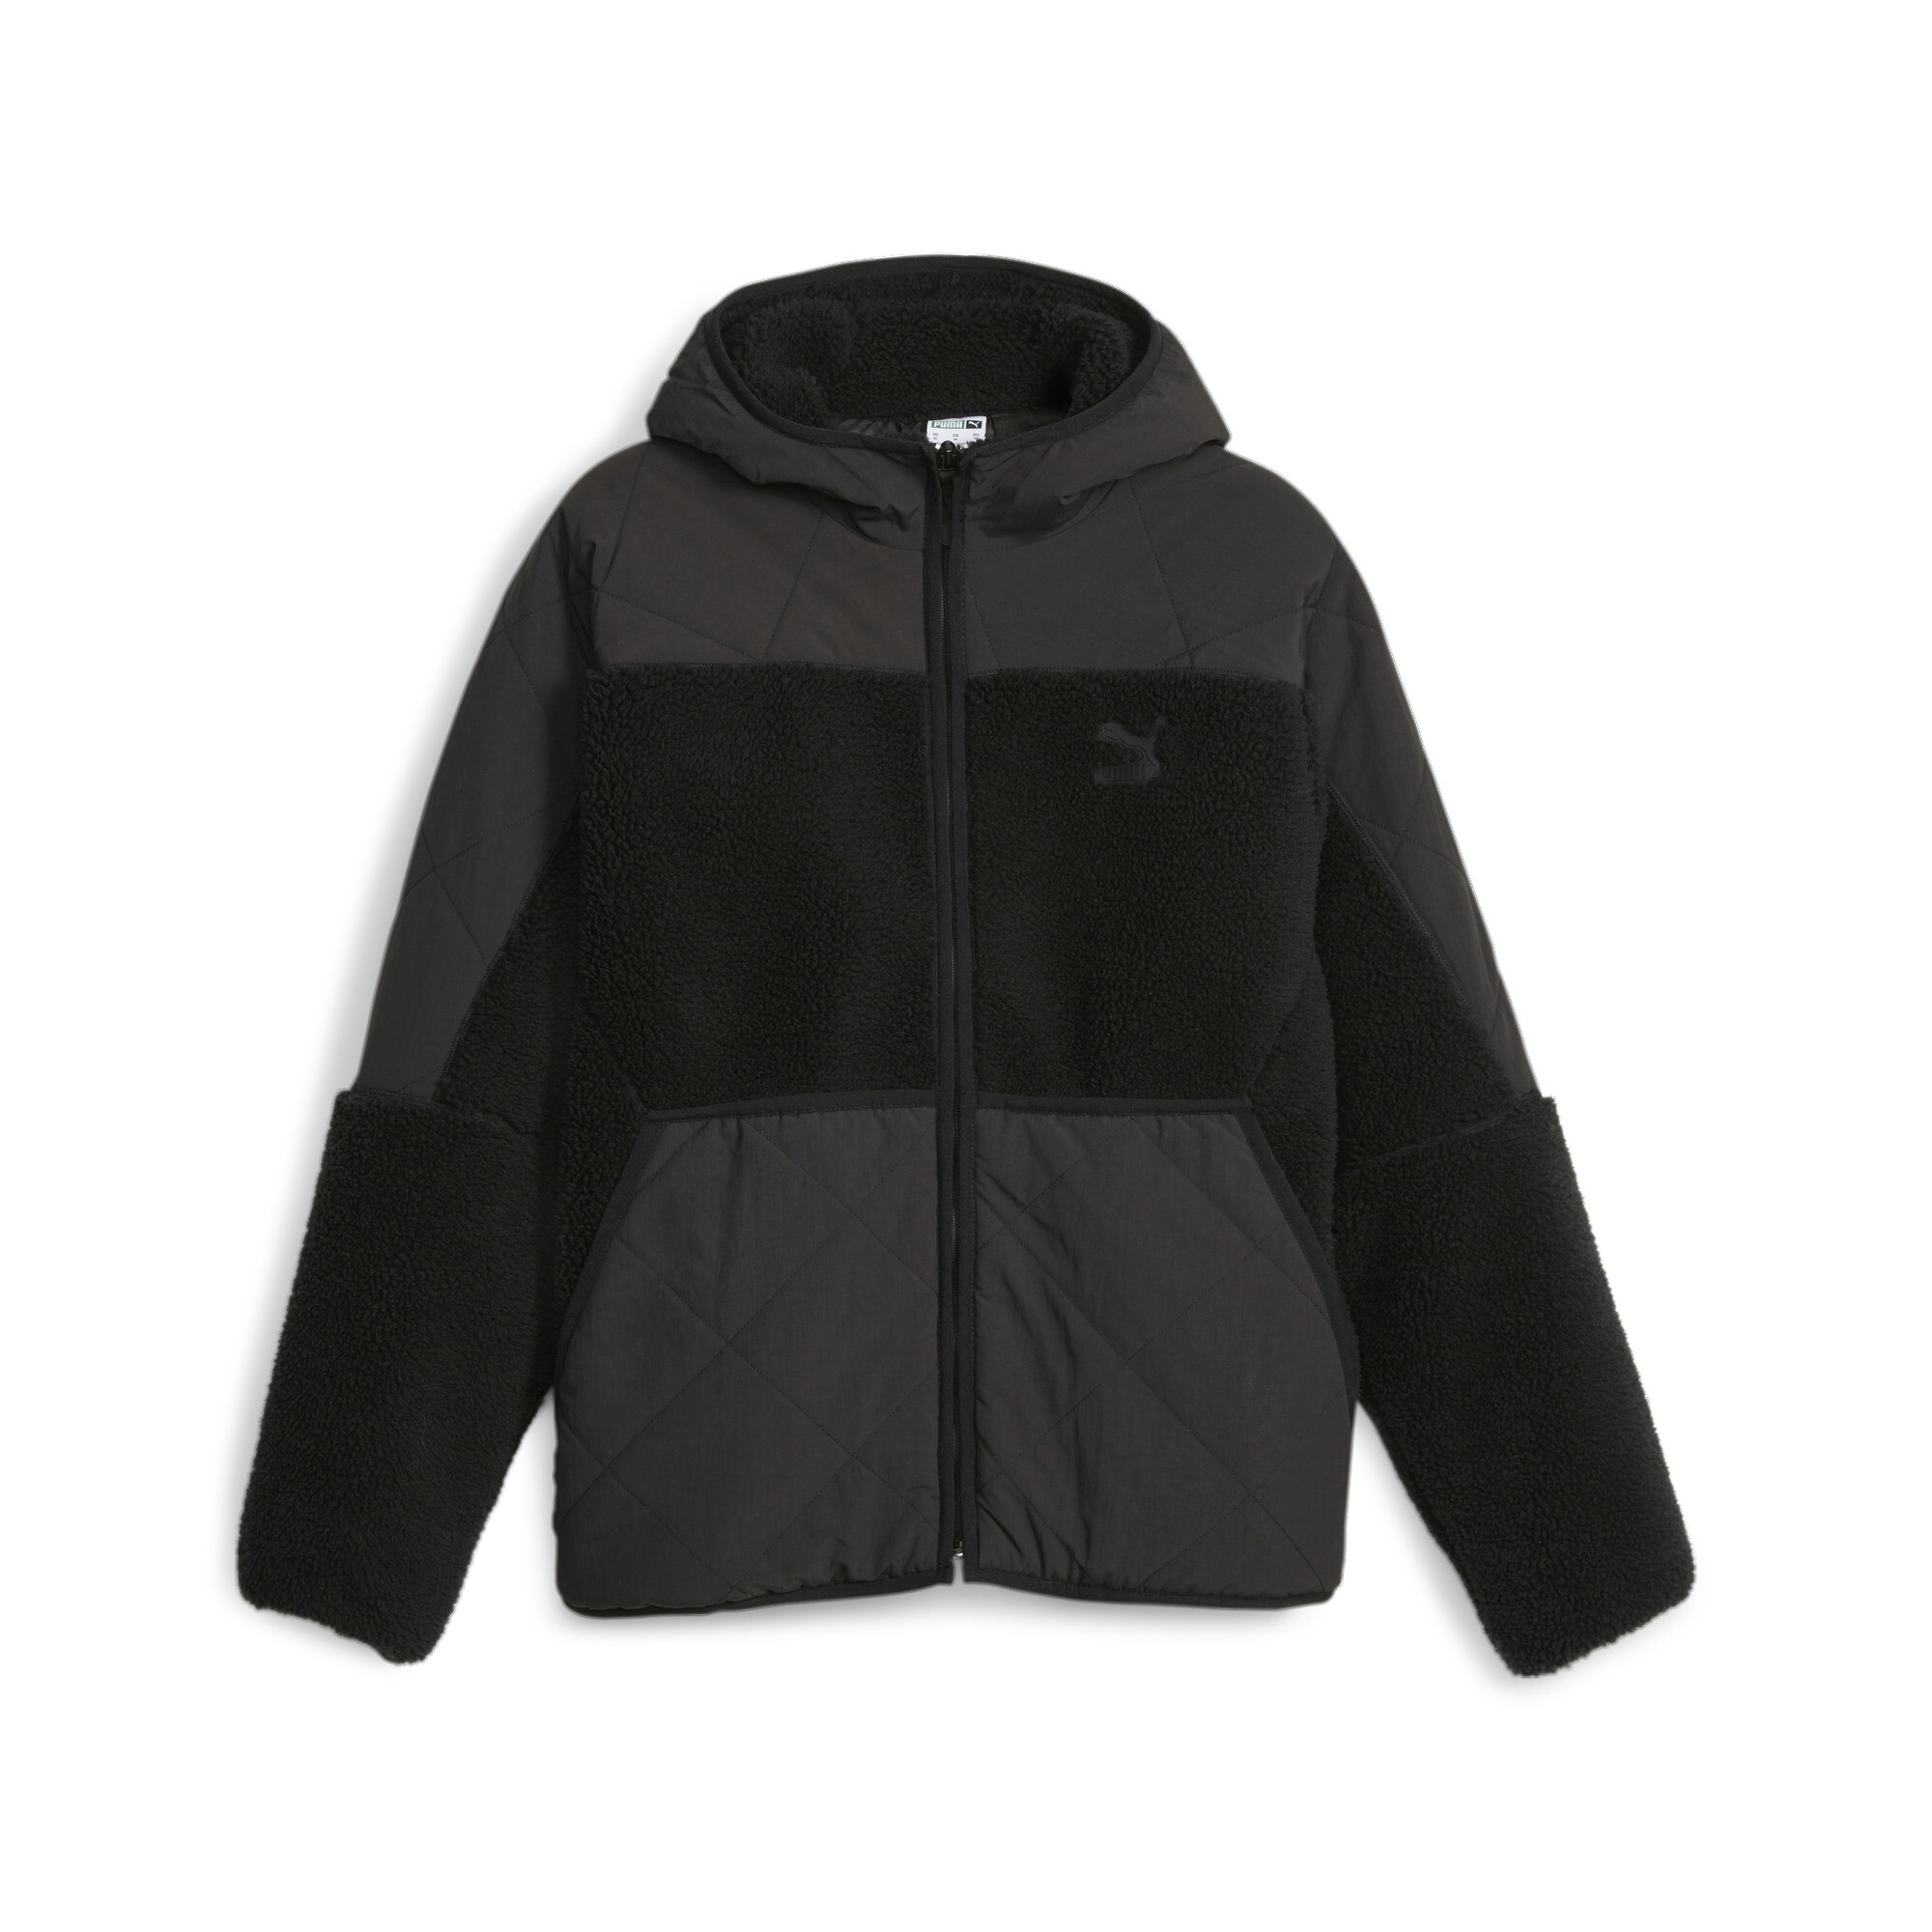 Men's Puma Classics's Utility Jacket, Black, Size M, Clothing